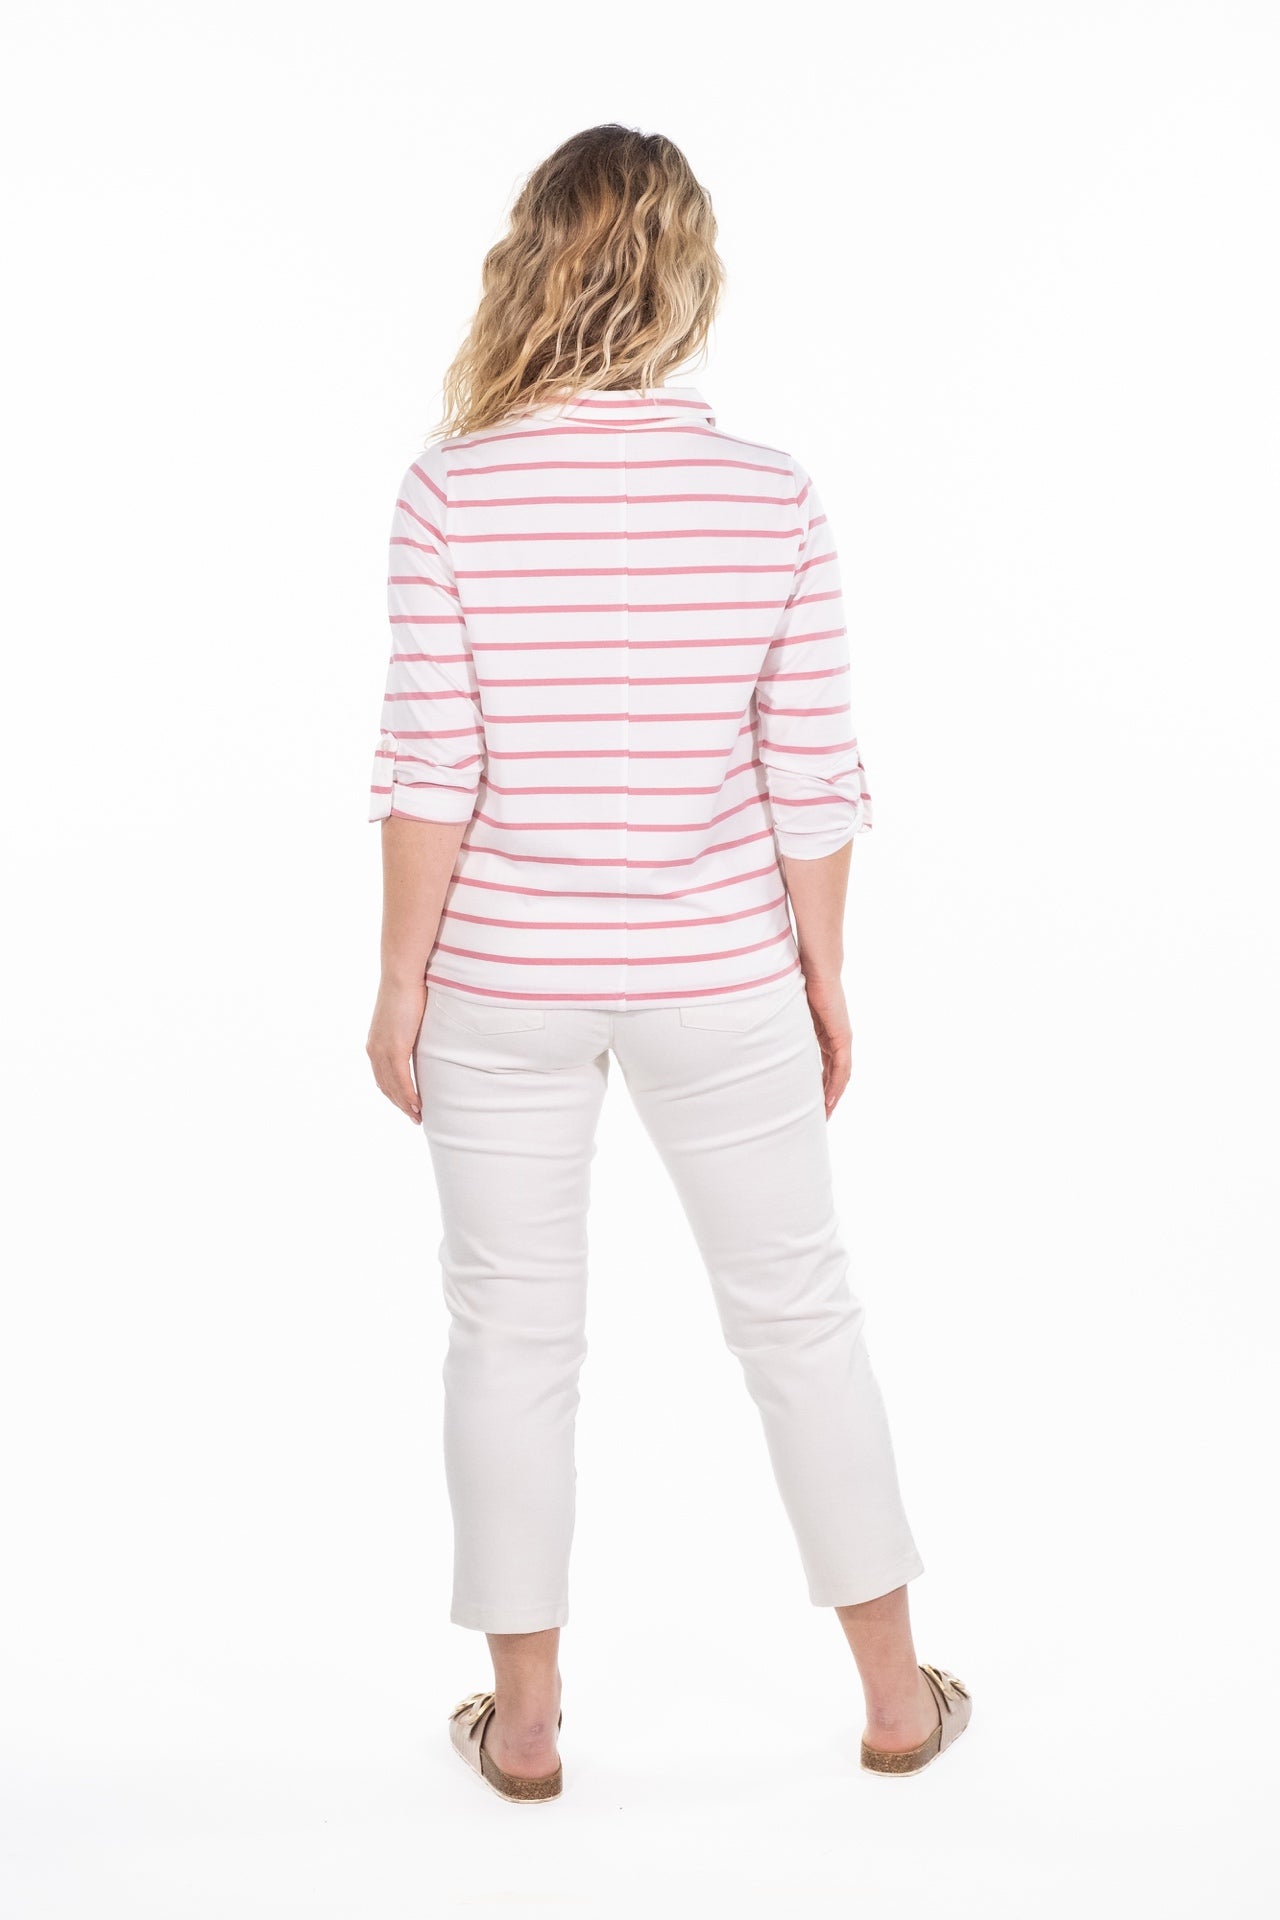 Joni Pink Stripe Jersey Shirt - Rupert and Buckley - Shirts & Tops